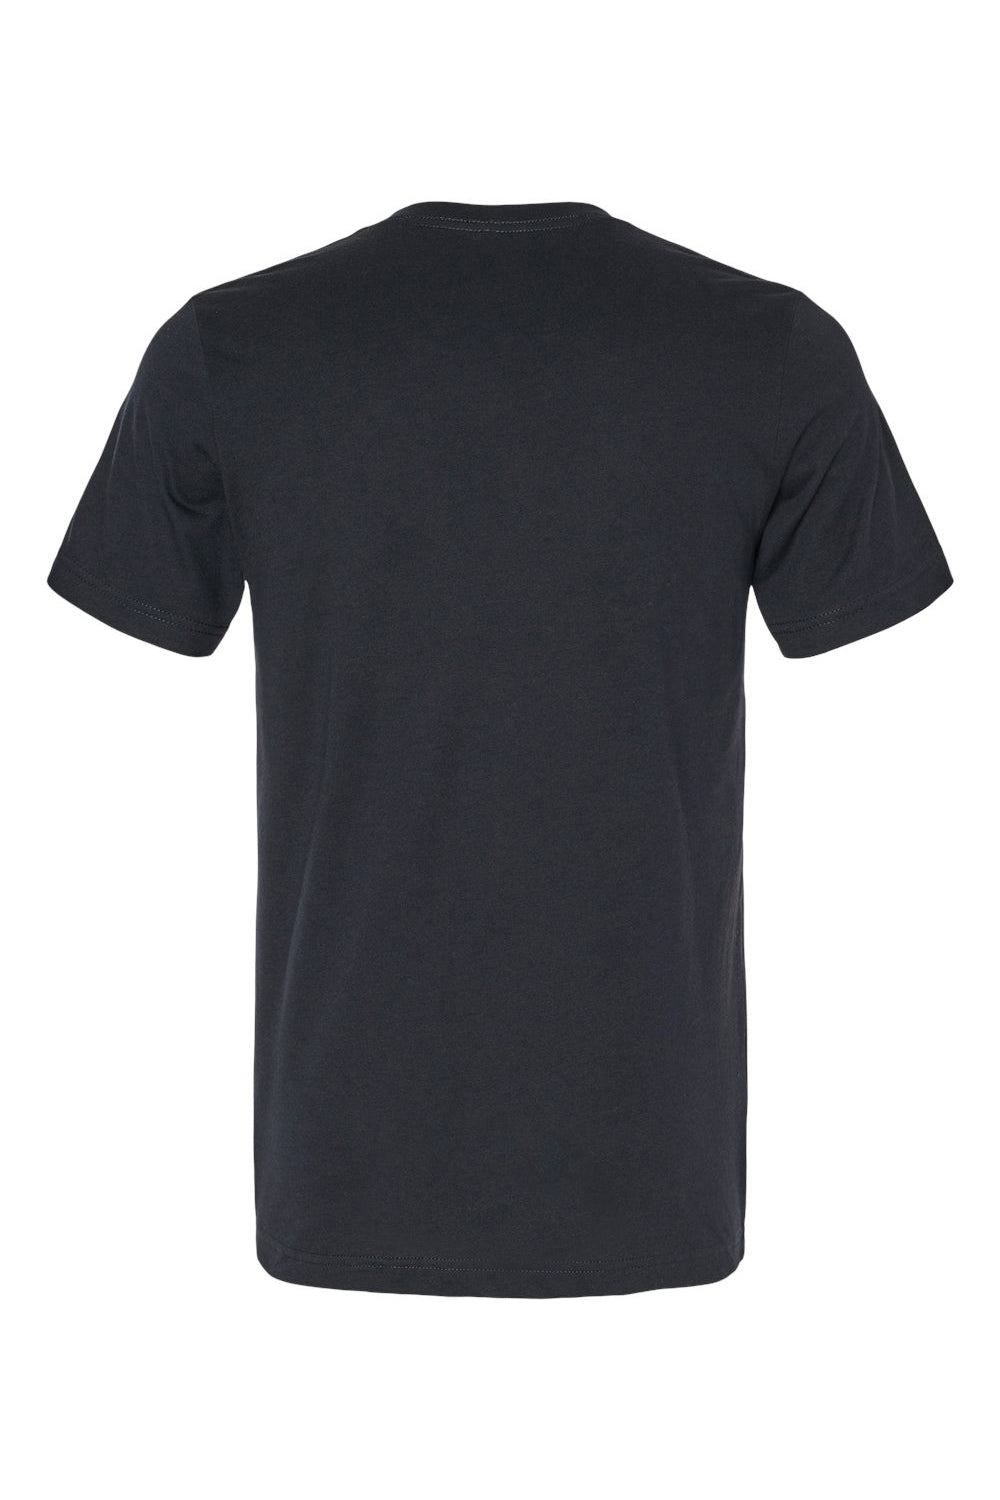 Bella + Canvas BC3005CVC Mens CVC Short Sleeve V-Neck T-Shirt Solid Black Flat Back